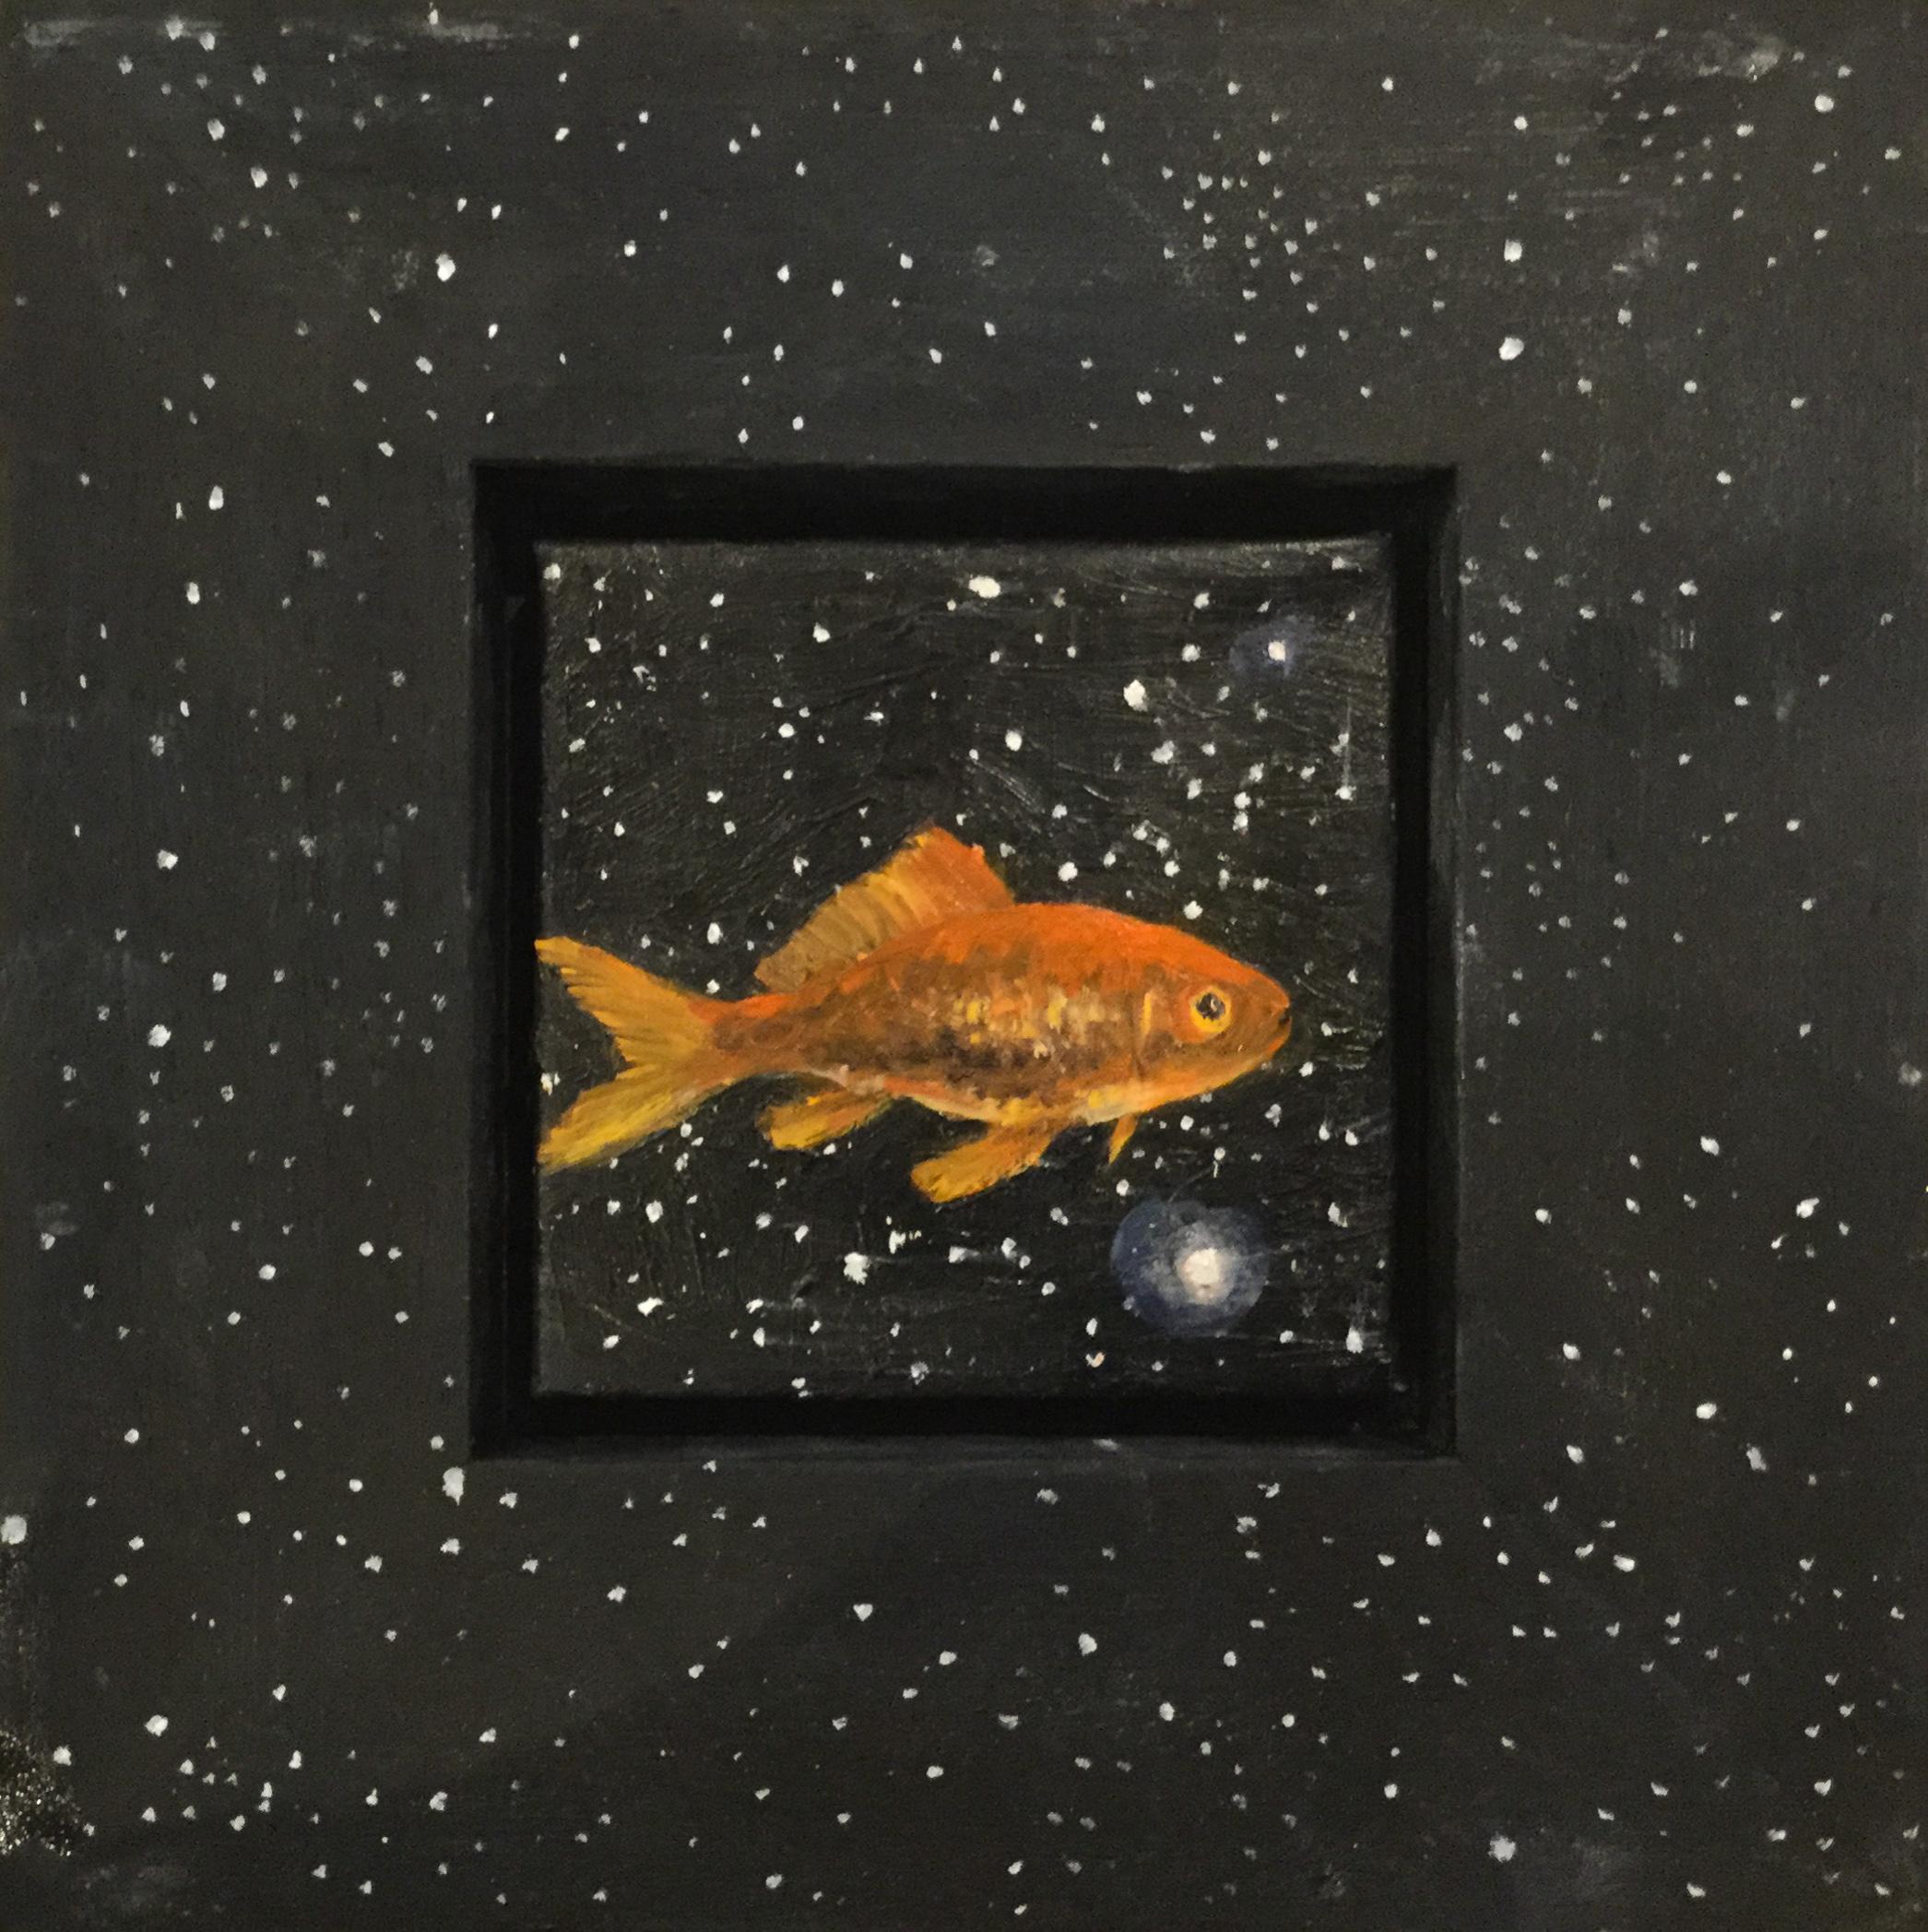 Julie Fleming-Williams Animal Painting - Goldfish by starlight II